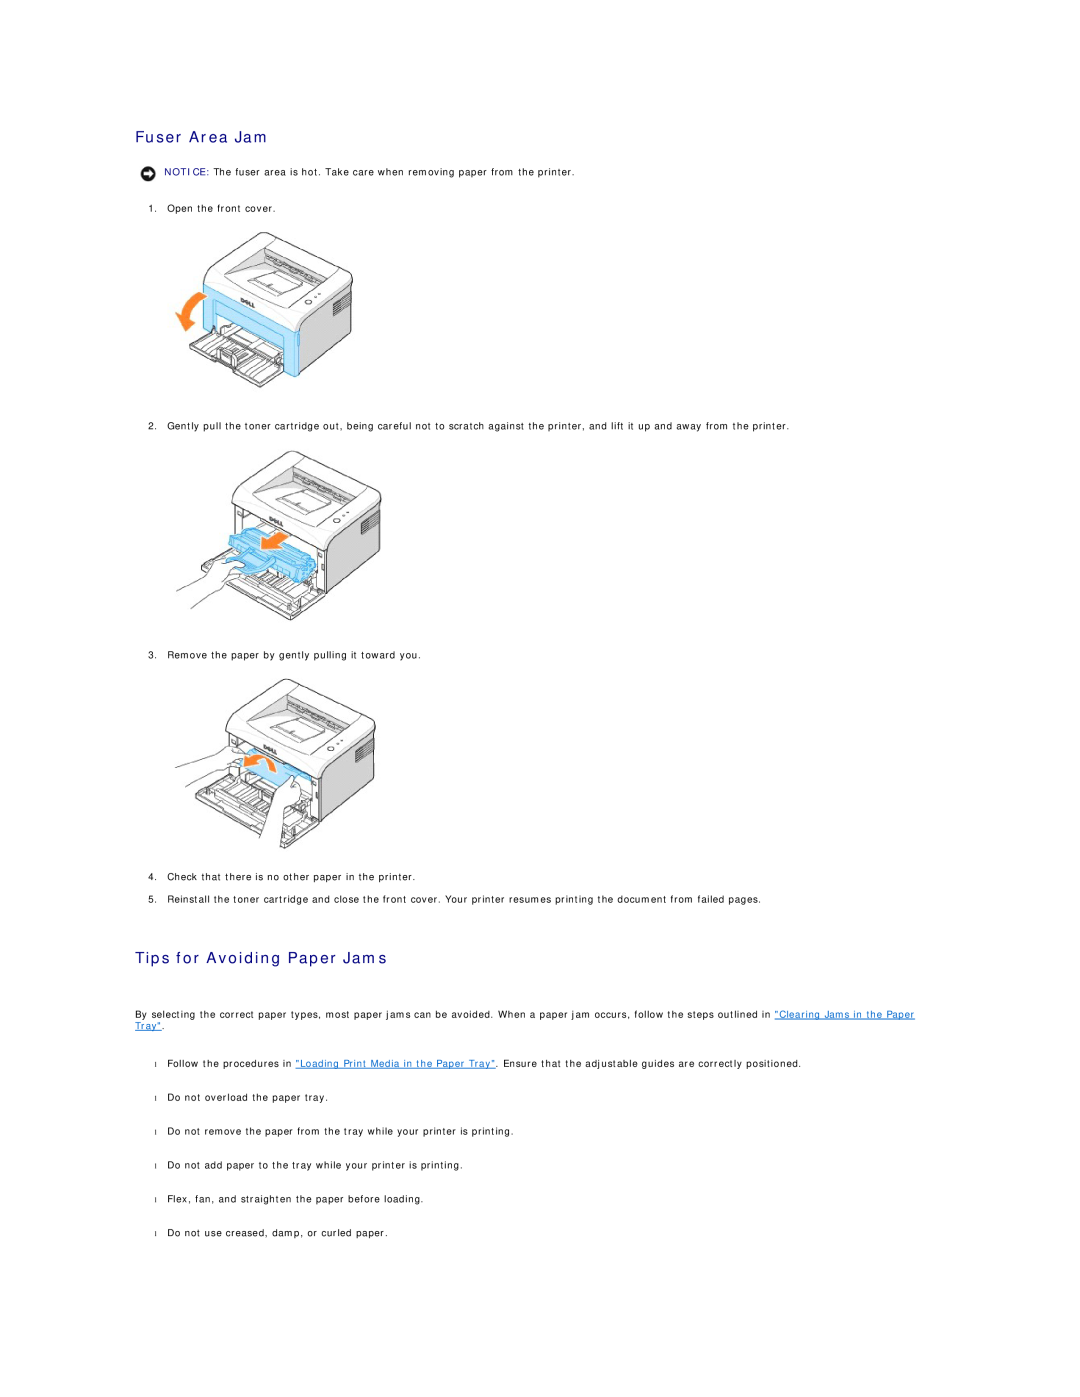 Dell 1100 specifications Fuser Area Jam, Tips for Avoiding Paper Jams 